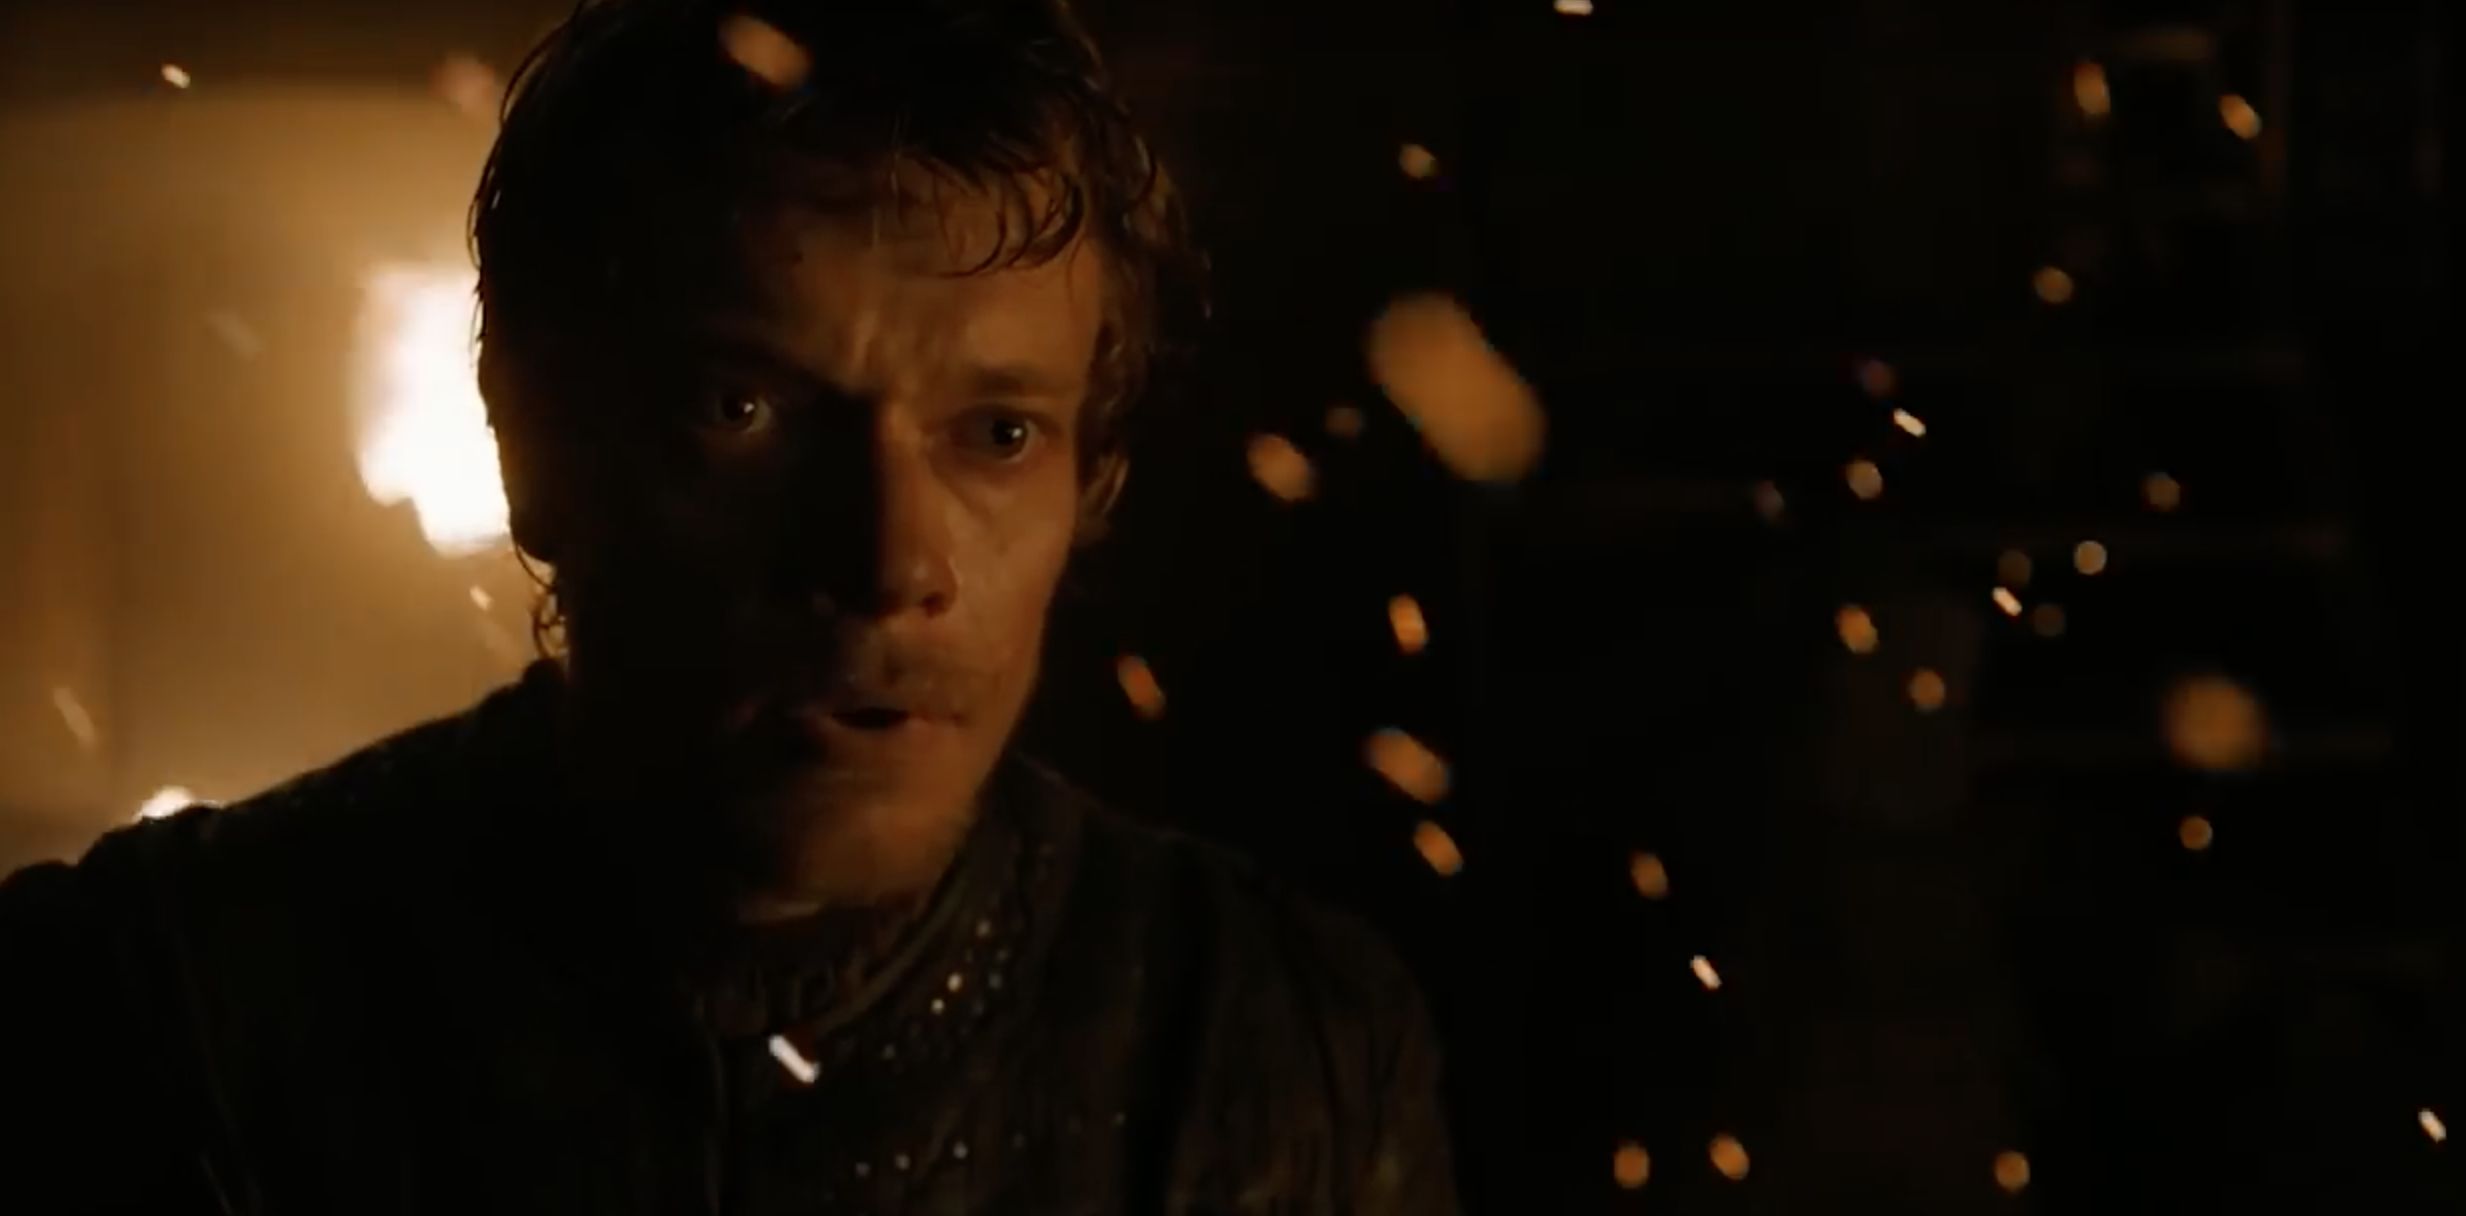 Alfie Allen as Theon Greyjoy on Game of Thrones